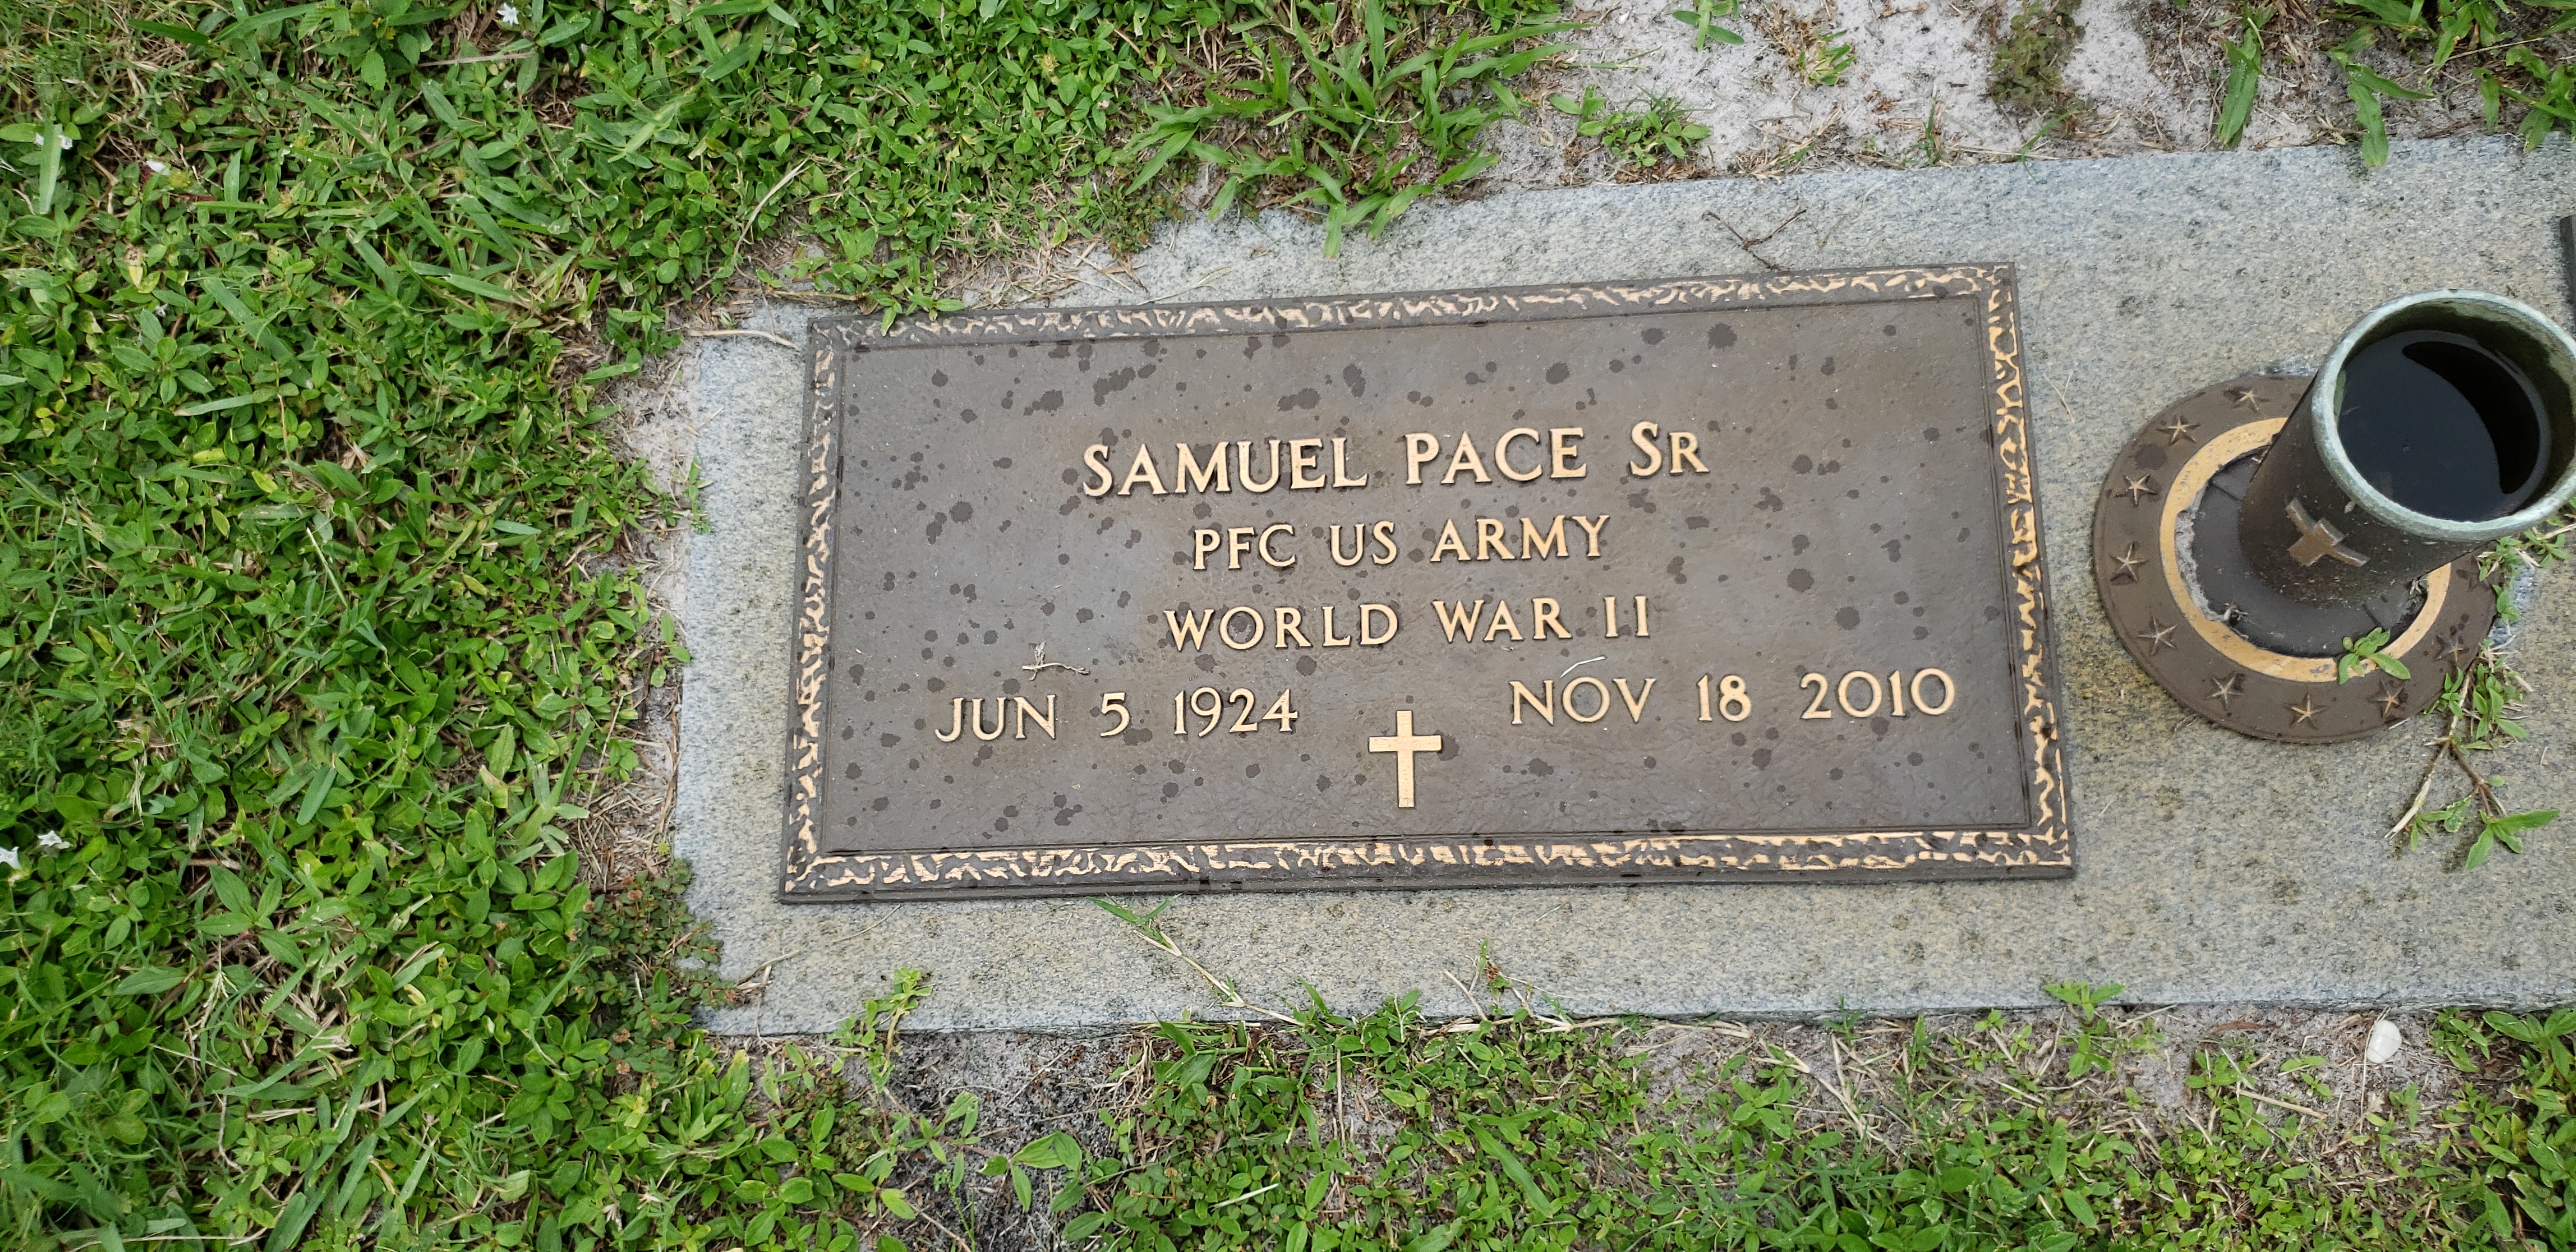 Samuel Pace, Sr